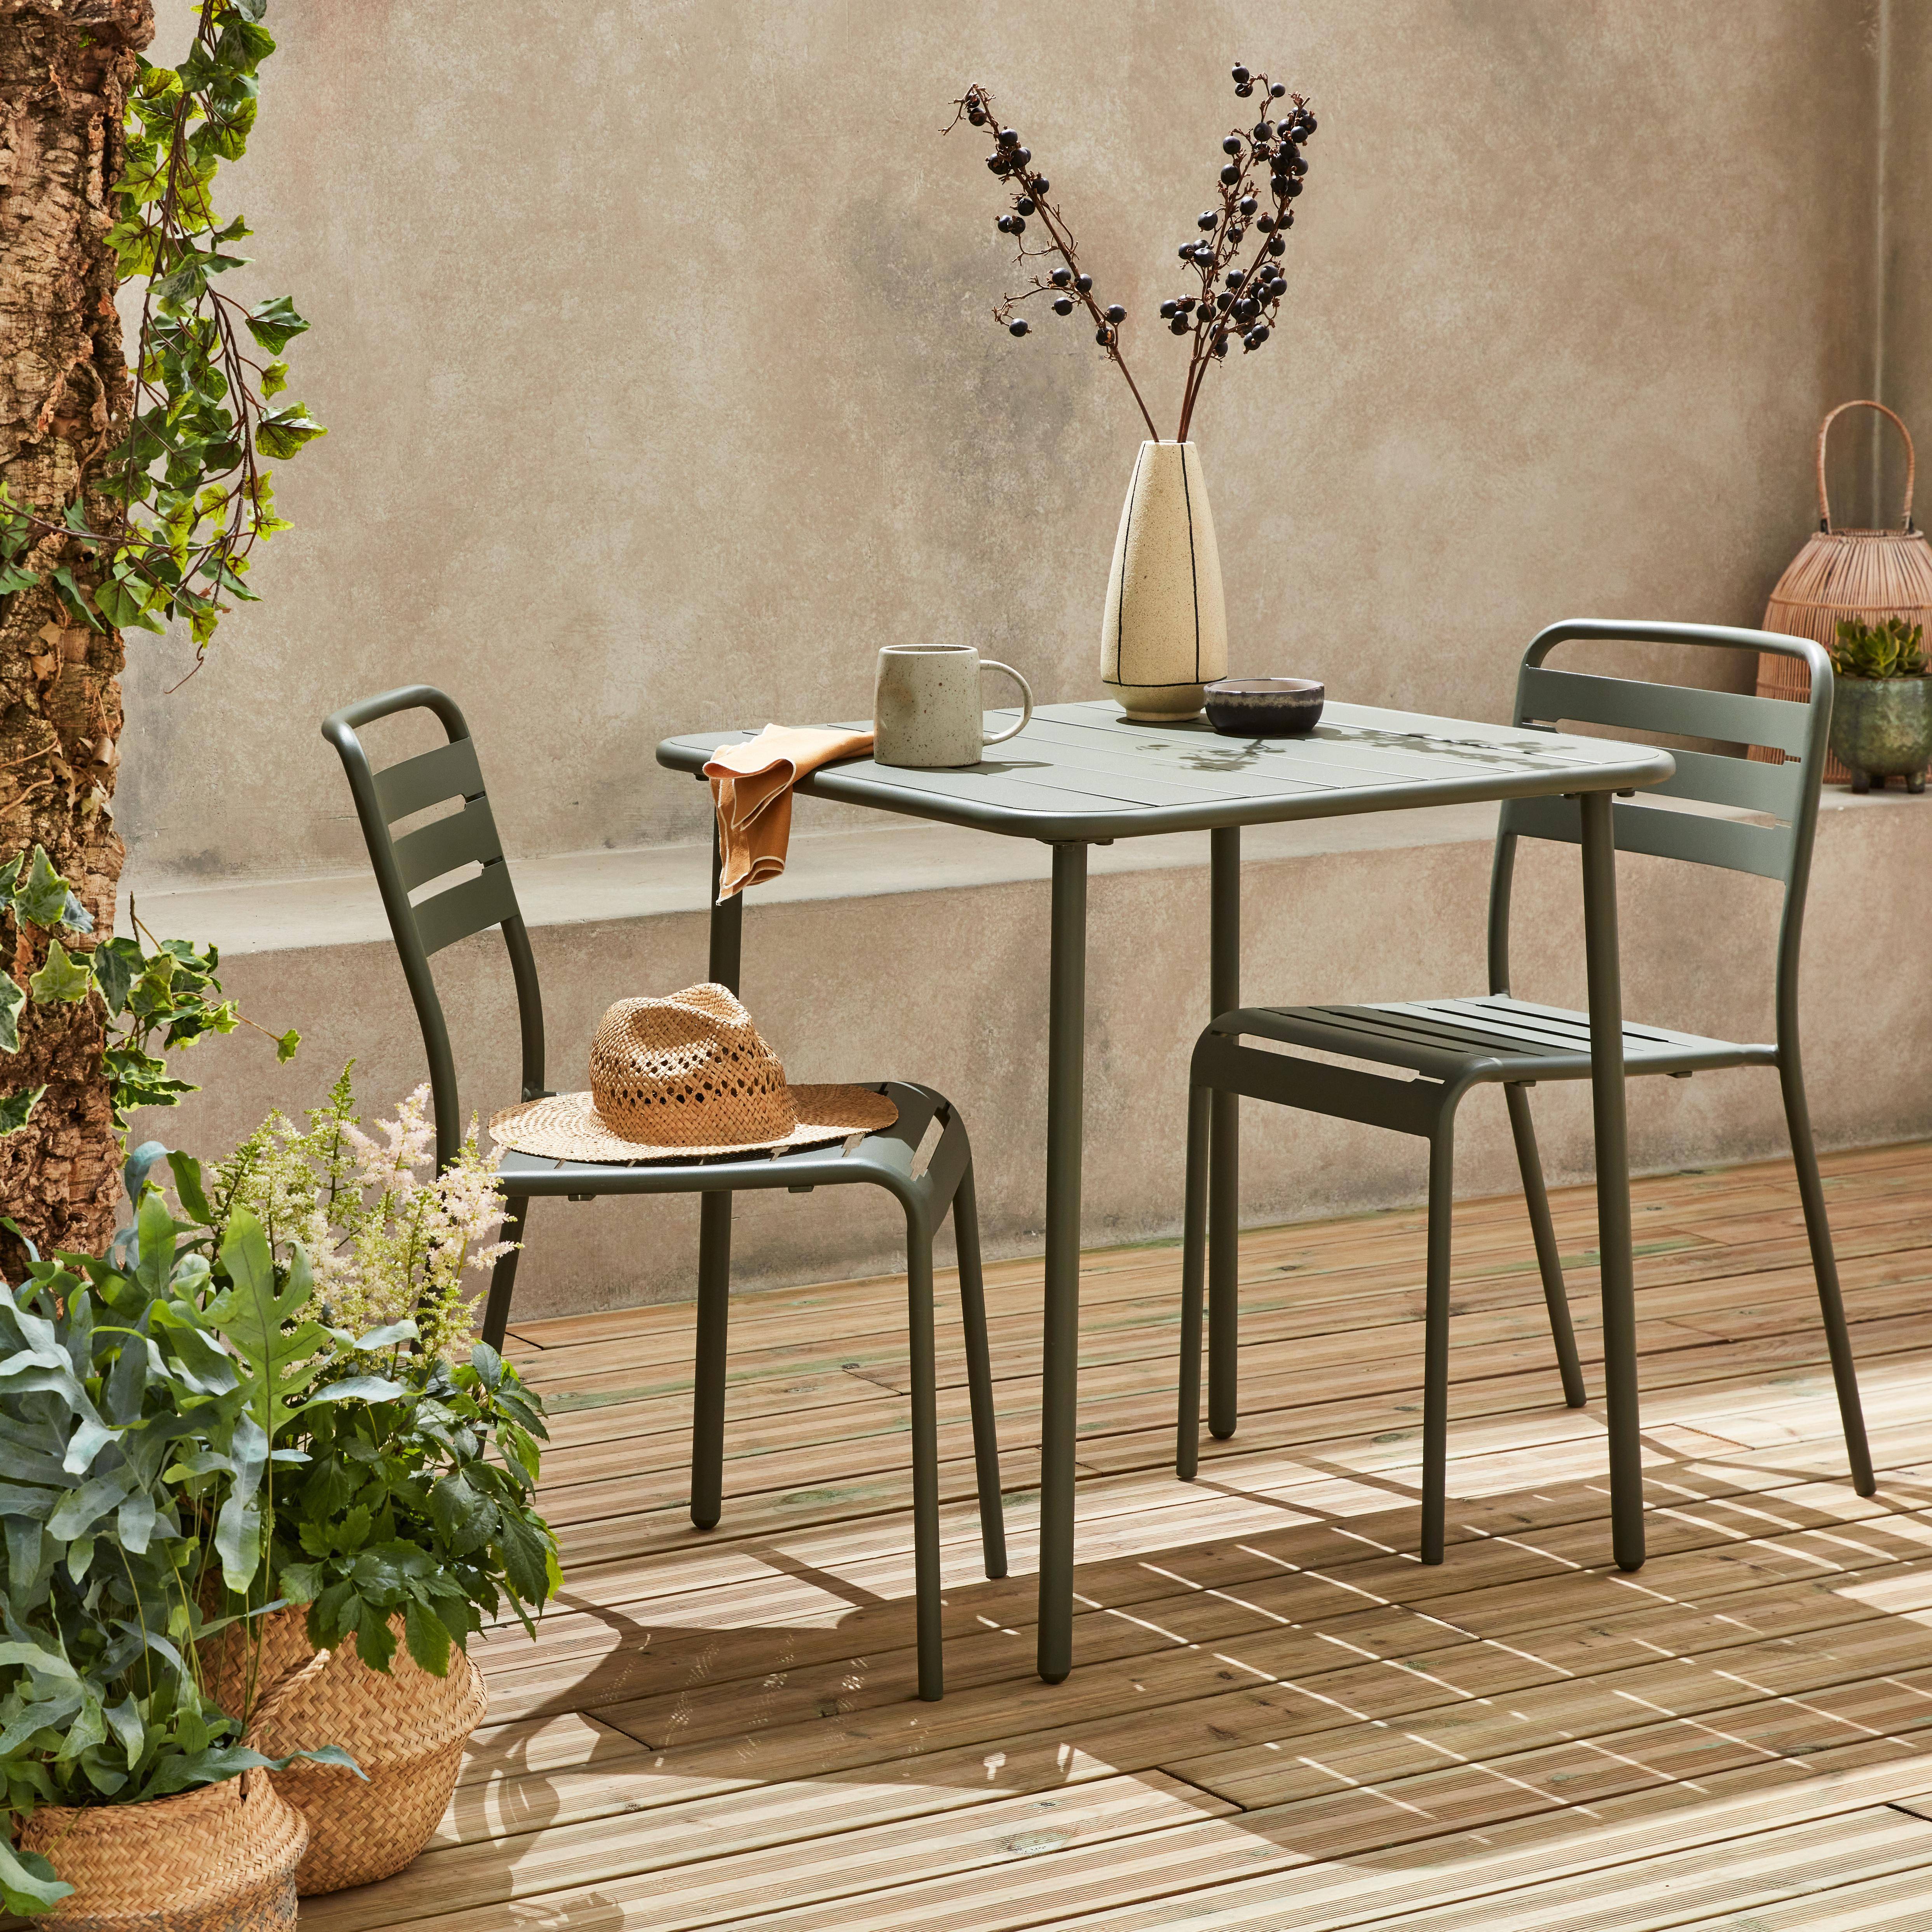 Amélia savane metalen tuintafel met 2 stoelen, latten en afgeronde hoeken, roestbestendige afwerking,sweeek,Photo2